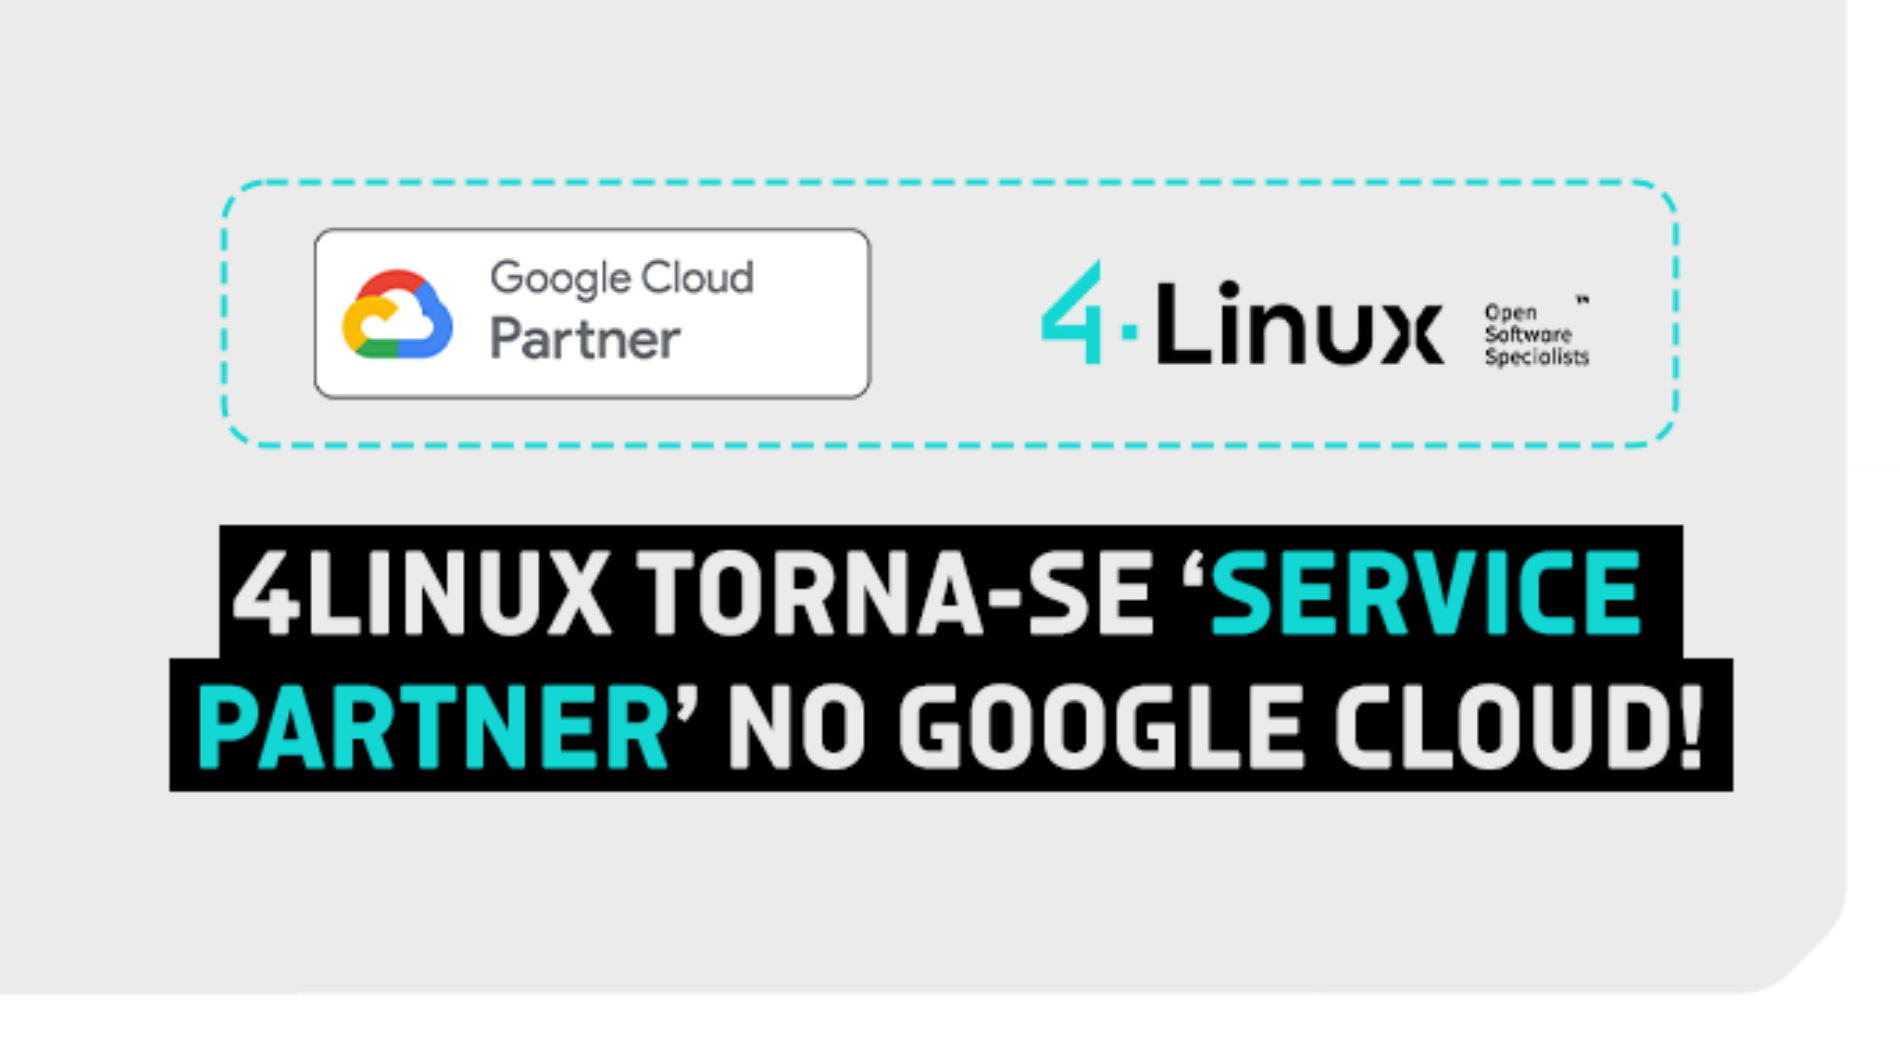 4Linux se une ao Google Cloud: Infraestrutura open source na nuvem